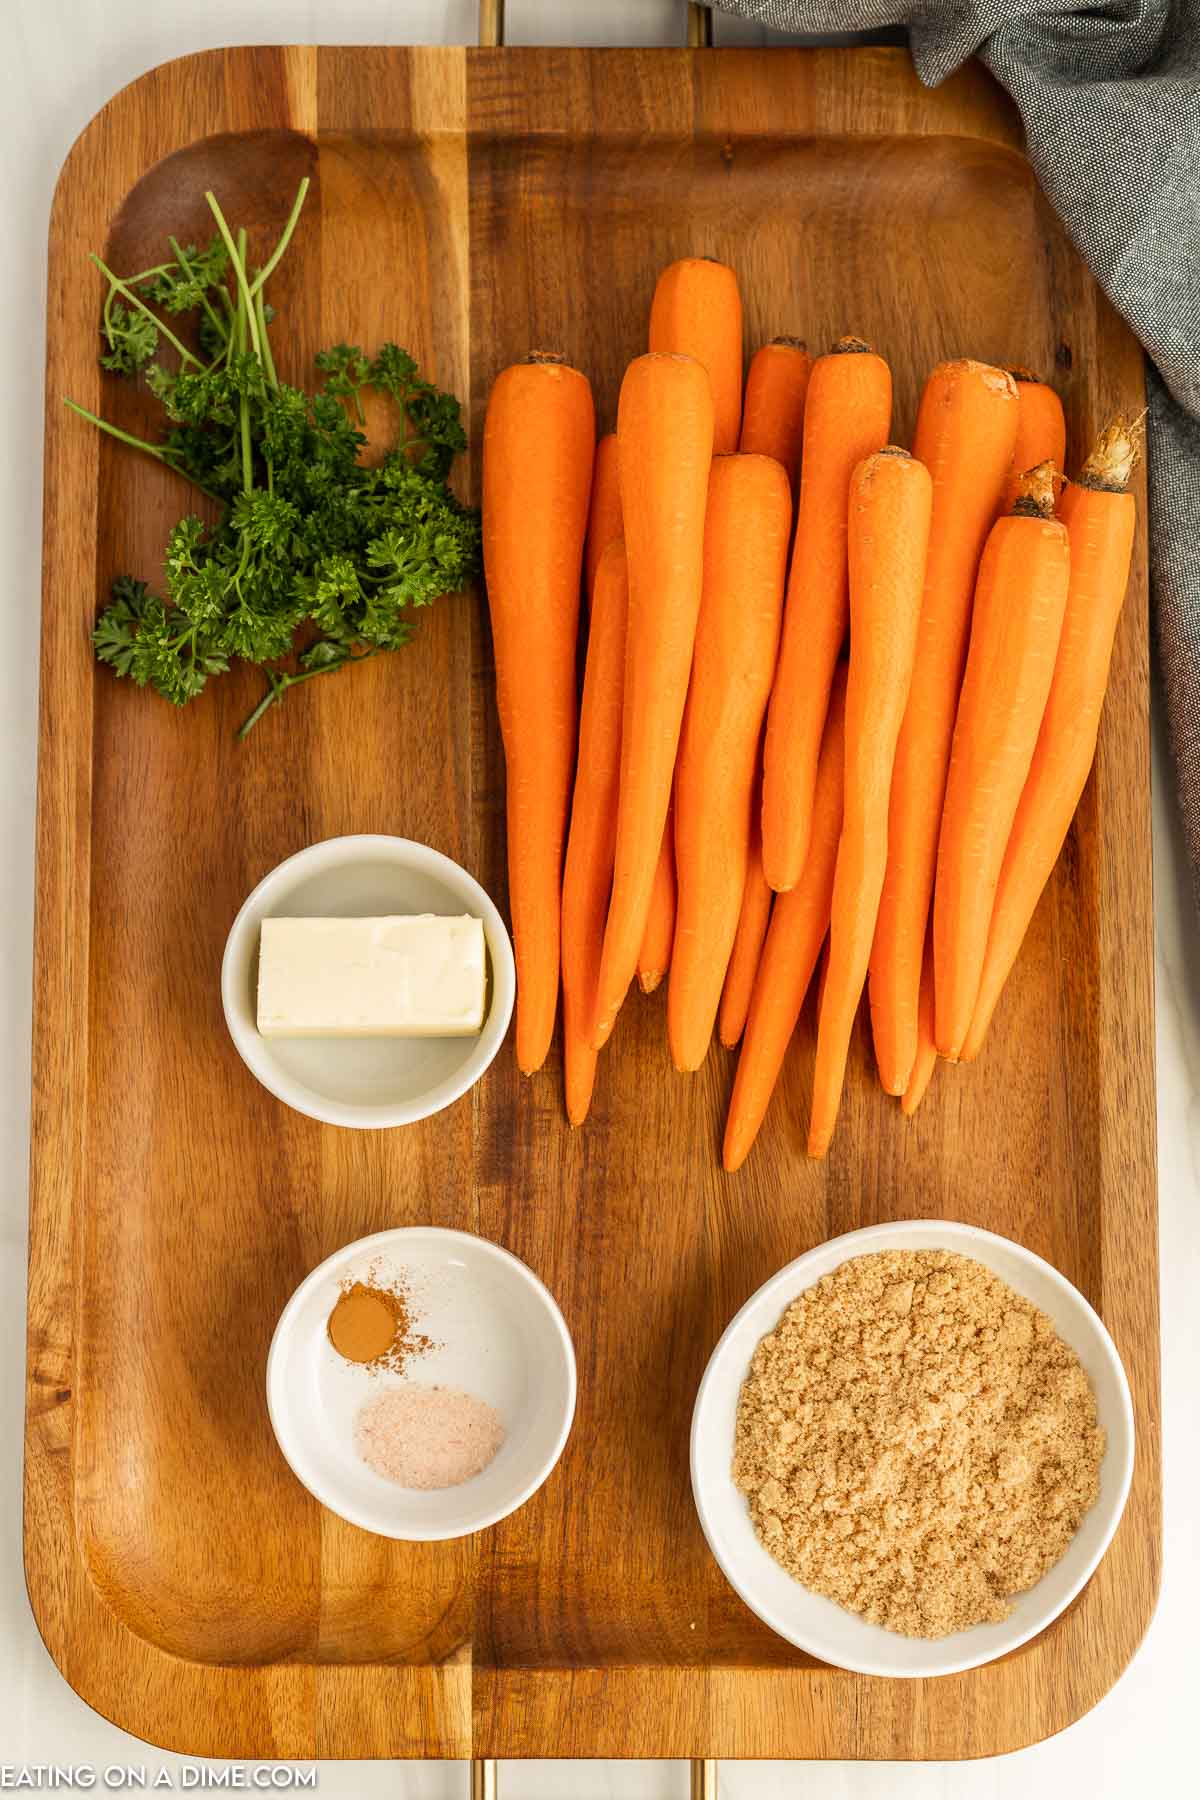 Crockpot Express Glazed Carrots - Simple and Seasonal